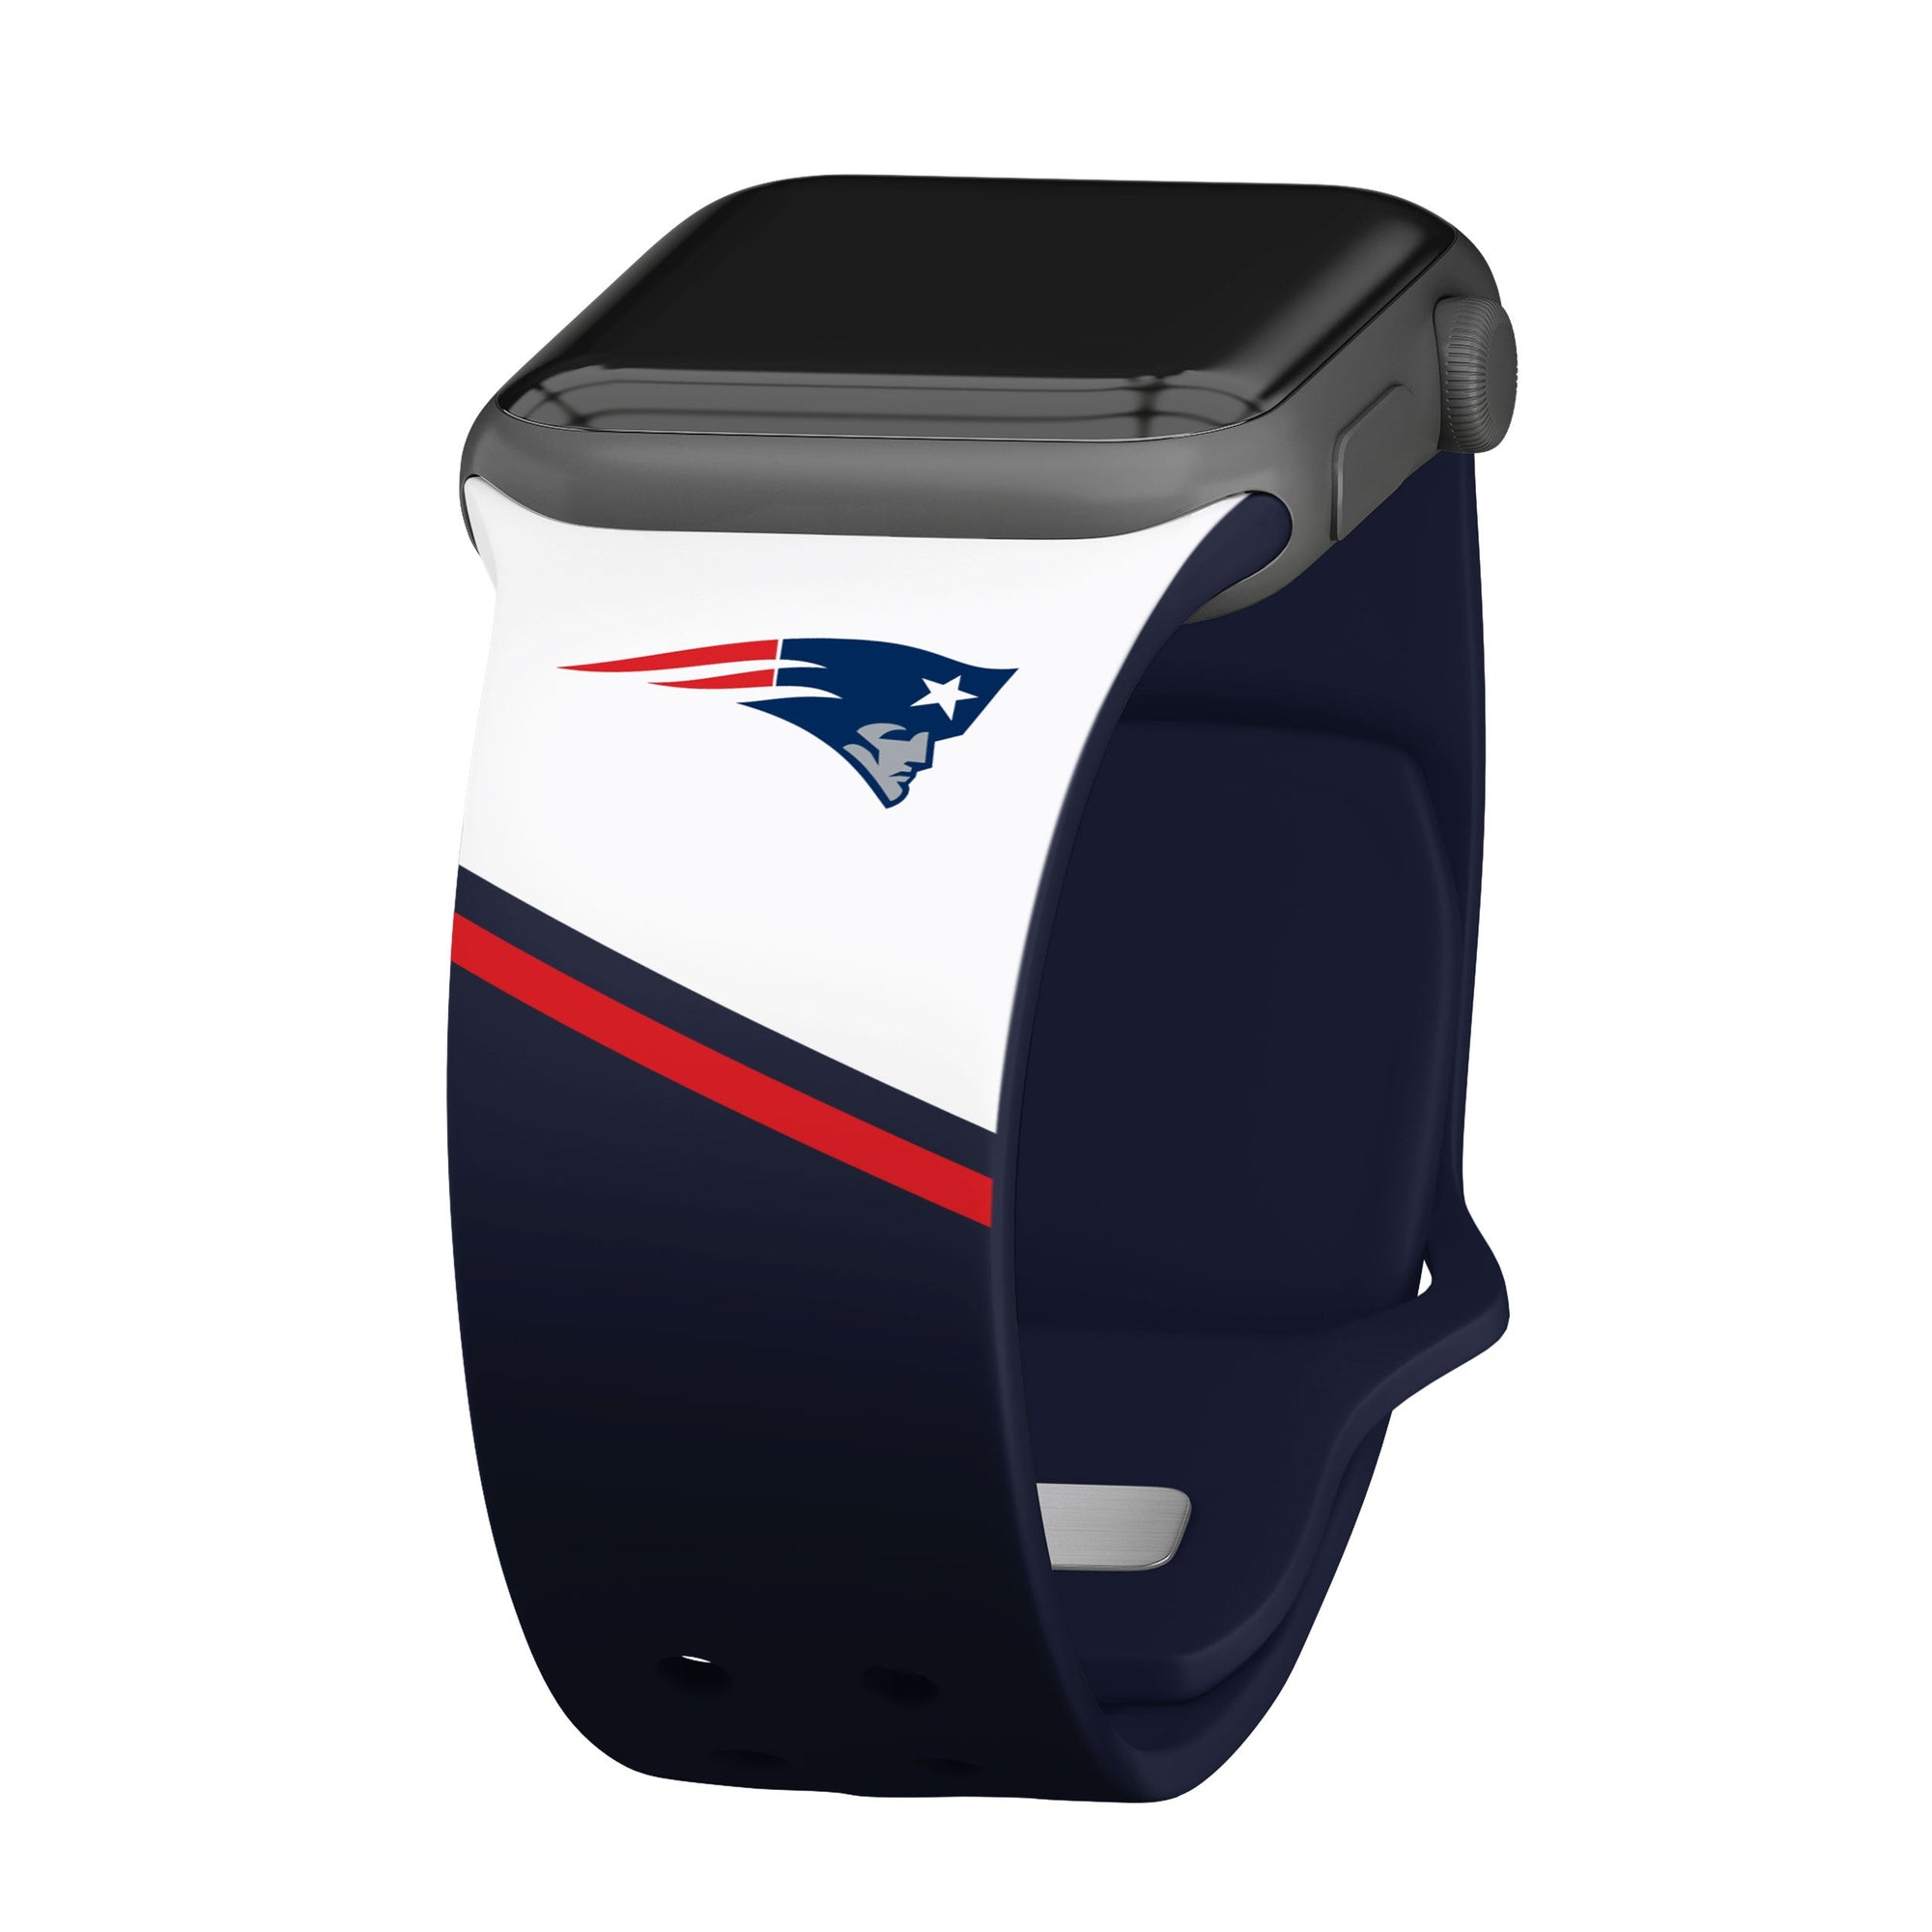 New England Patriots HD Champion Series Apple Watch Band